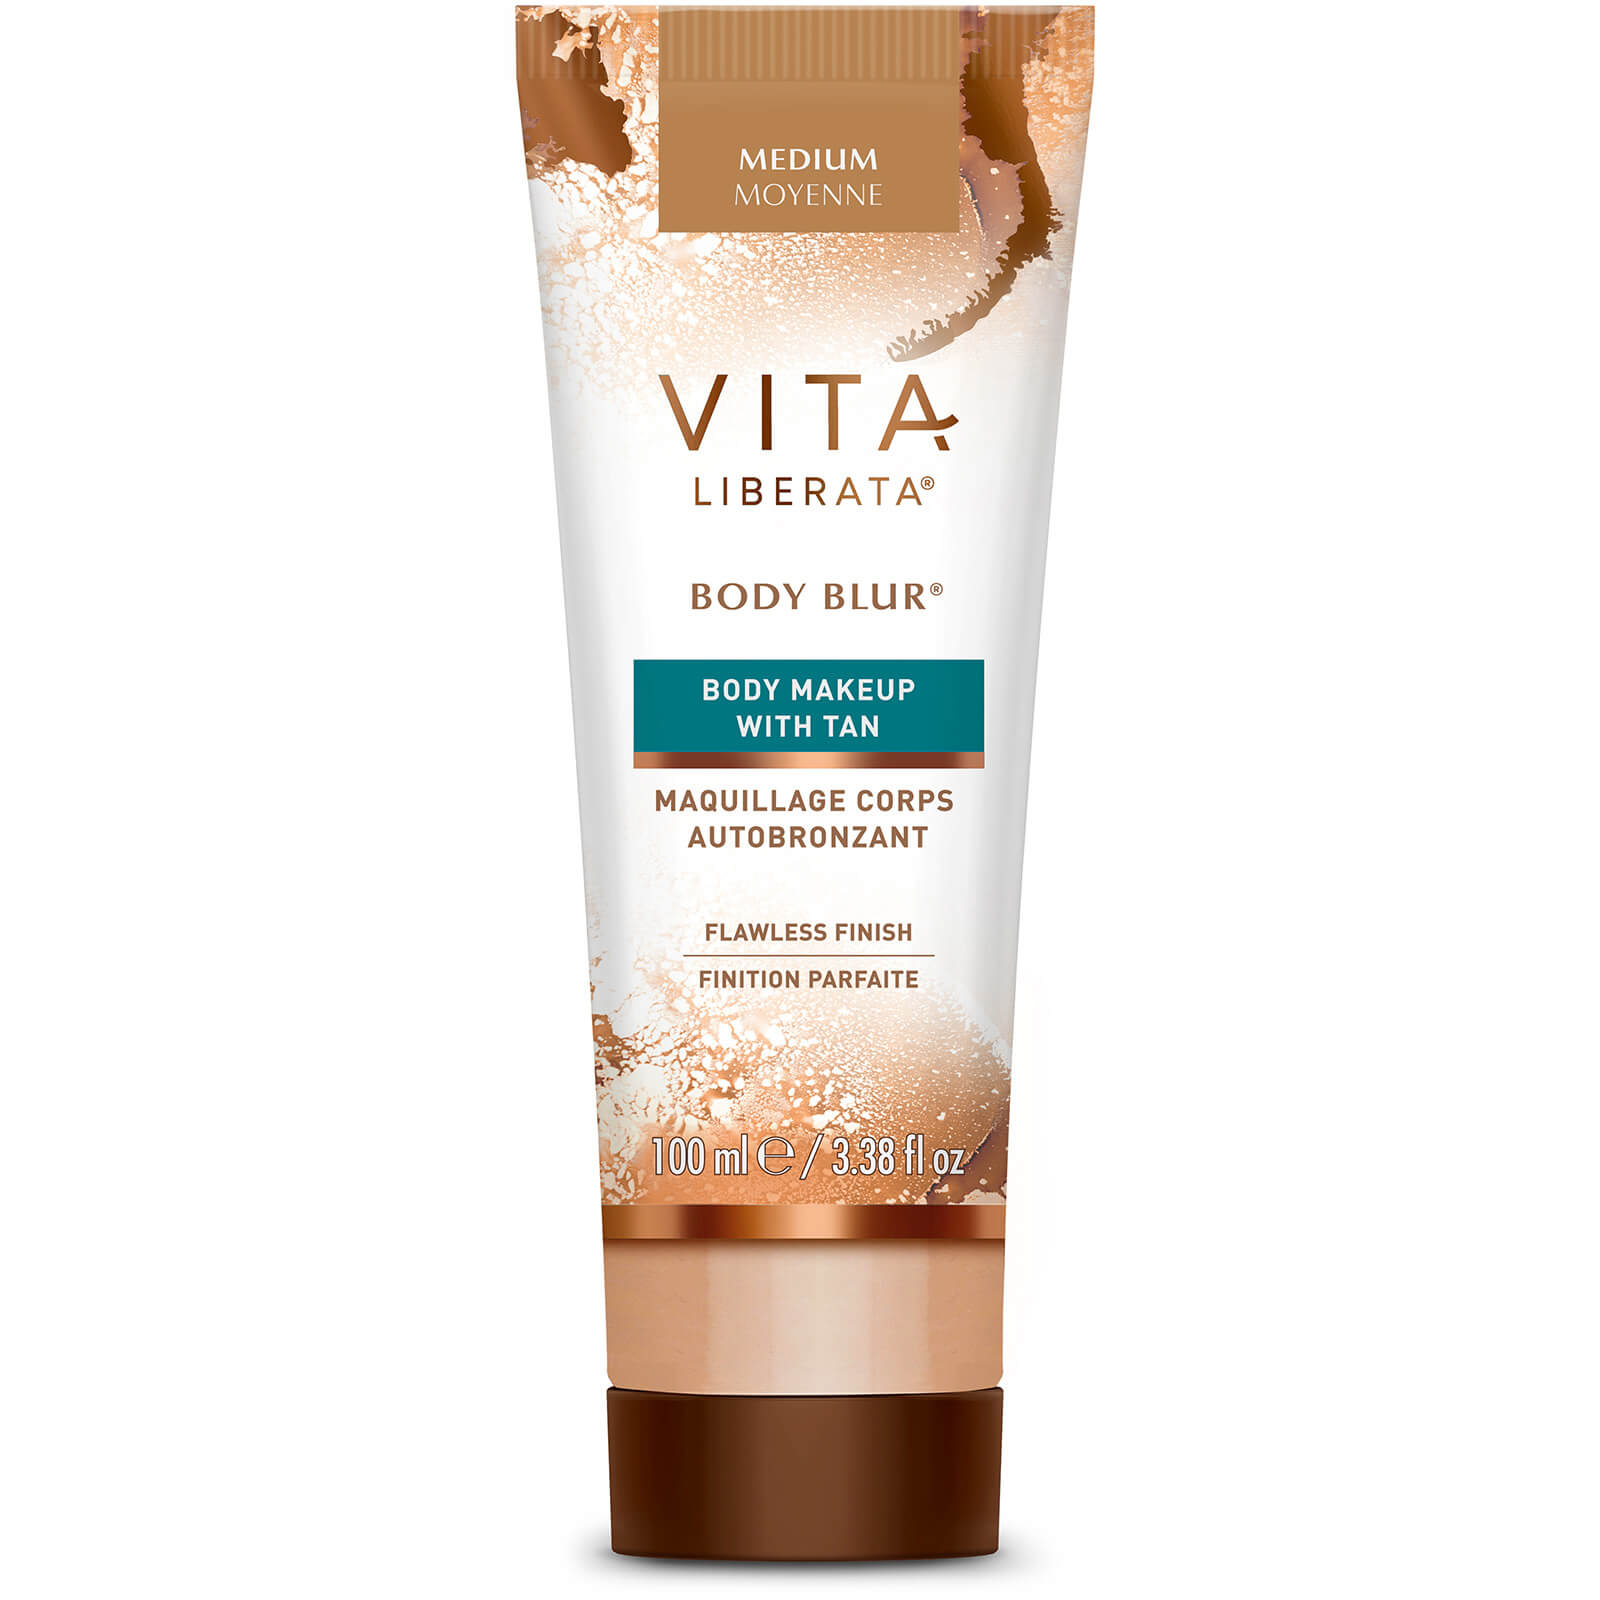 Vita Liberata Body Blur with Tan 100ml (Various Shades) - Medium